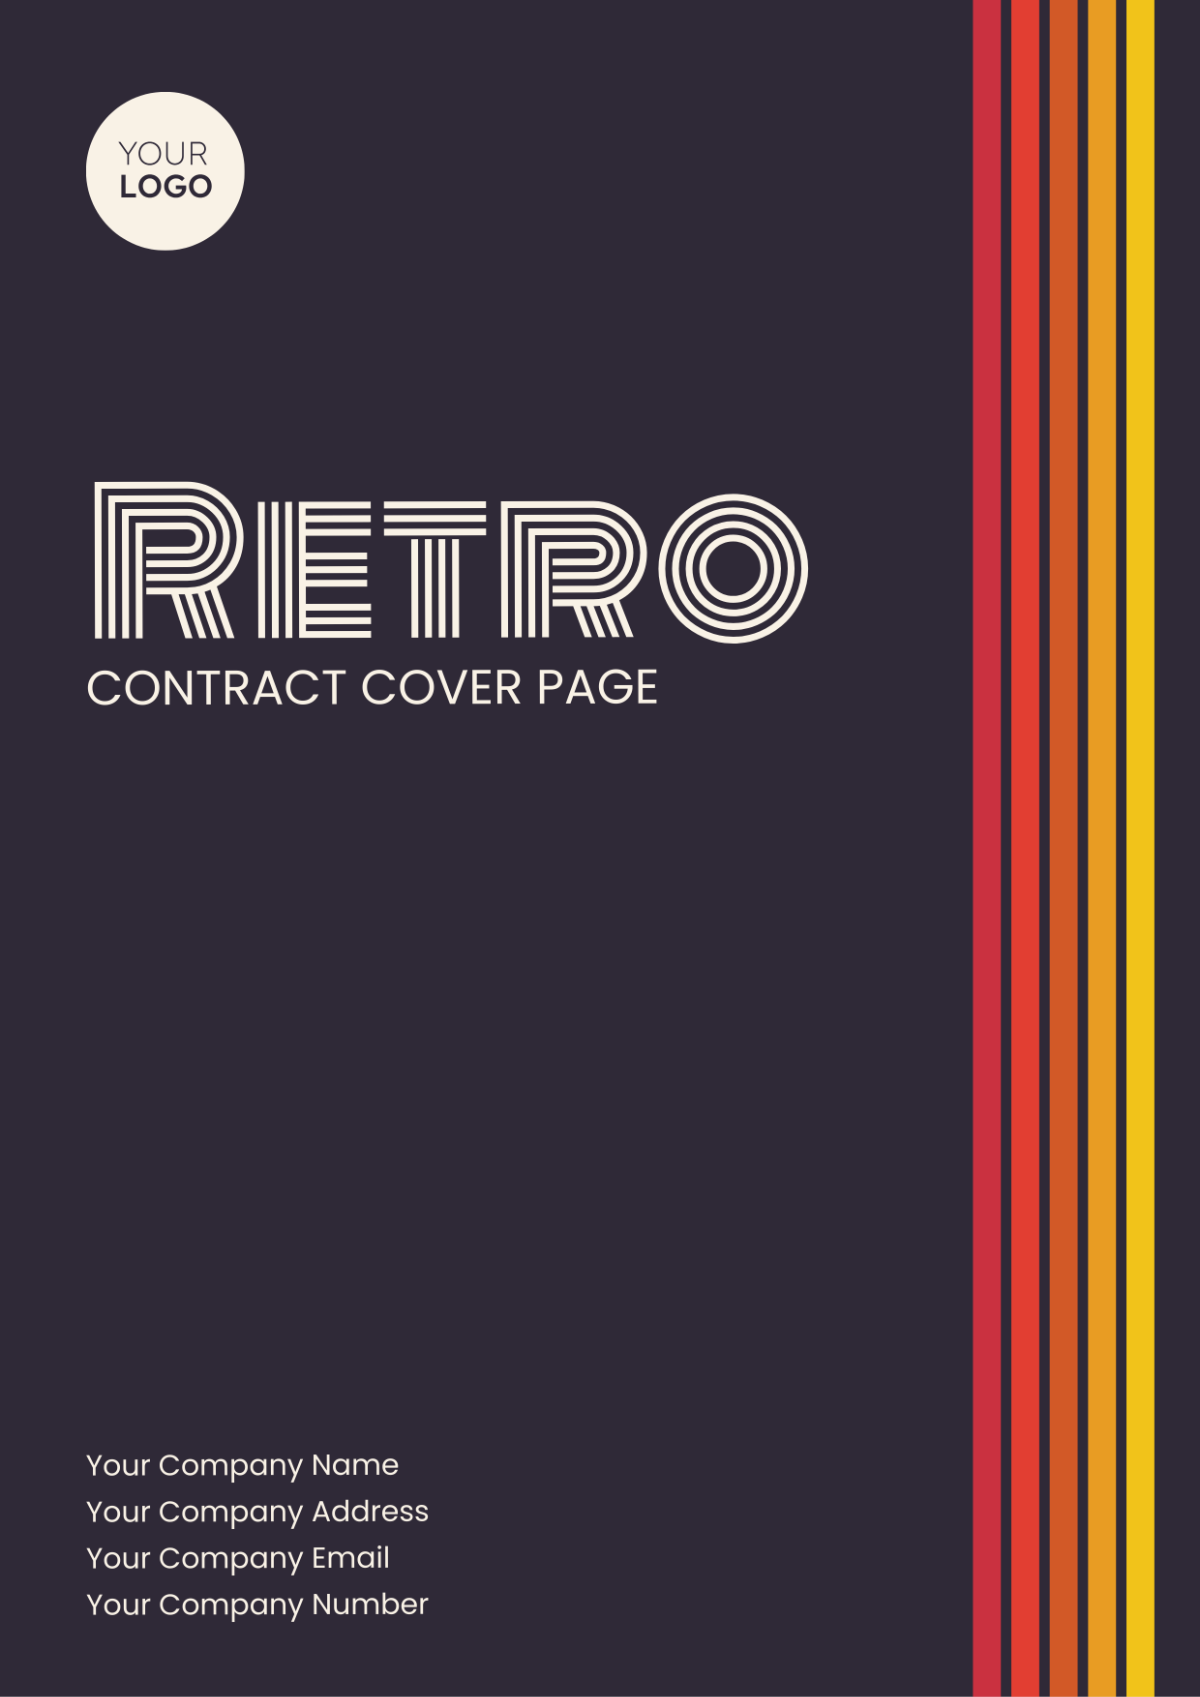 Retro Contract Cover Page